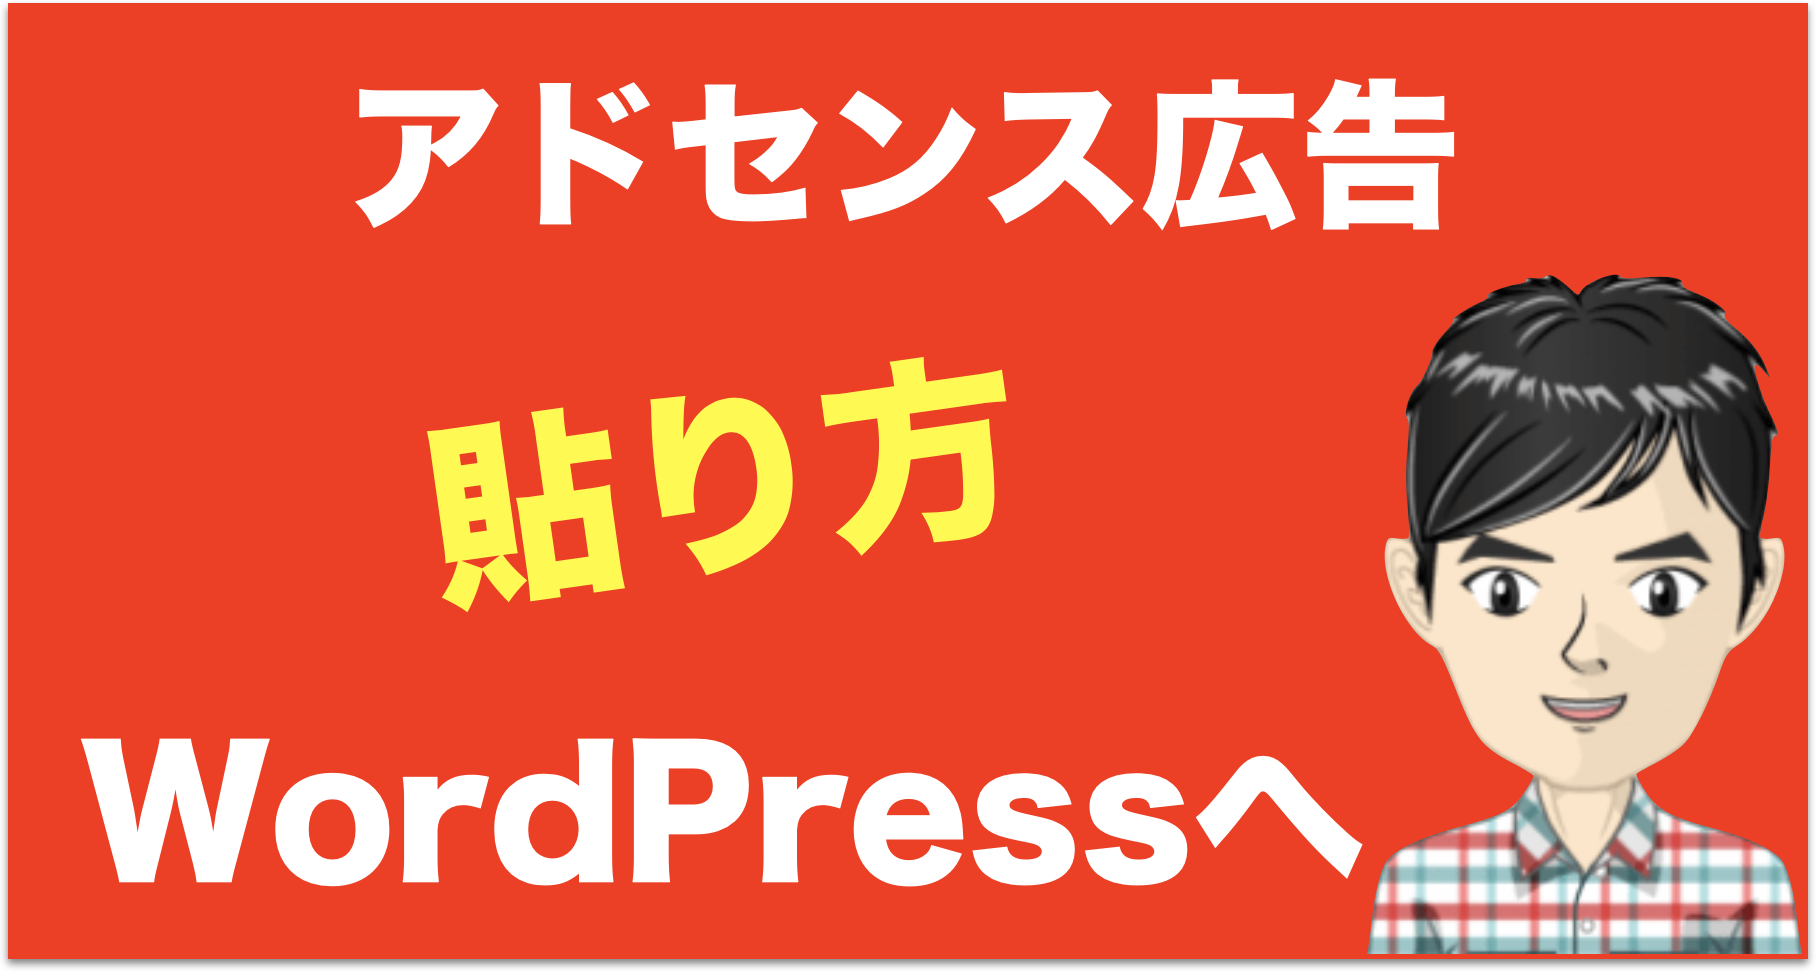 WordPressへのアドセンス広告の貼り方【2021】